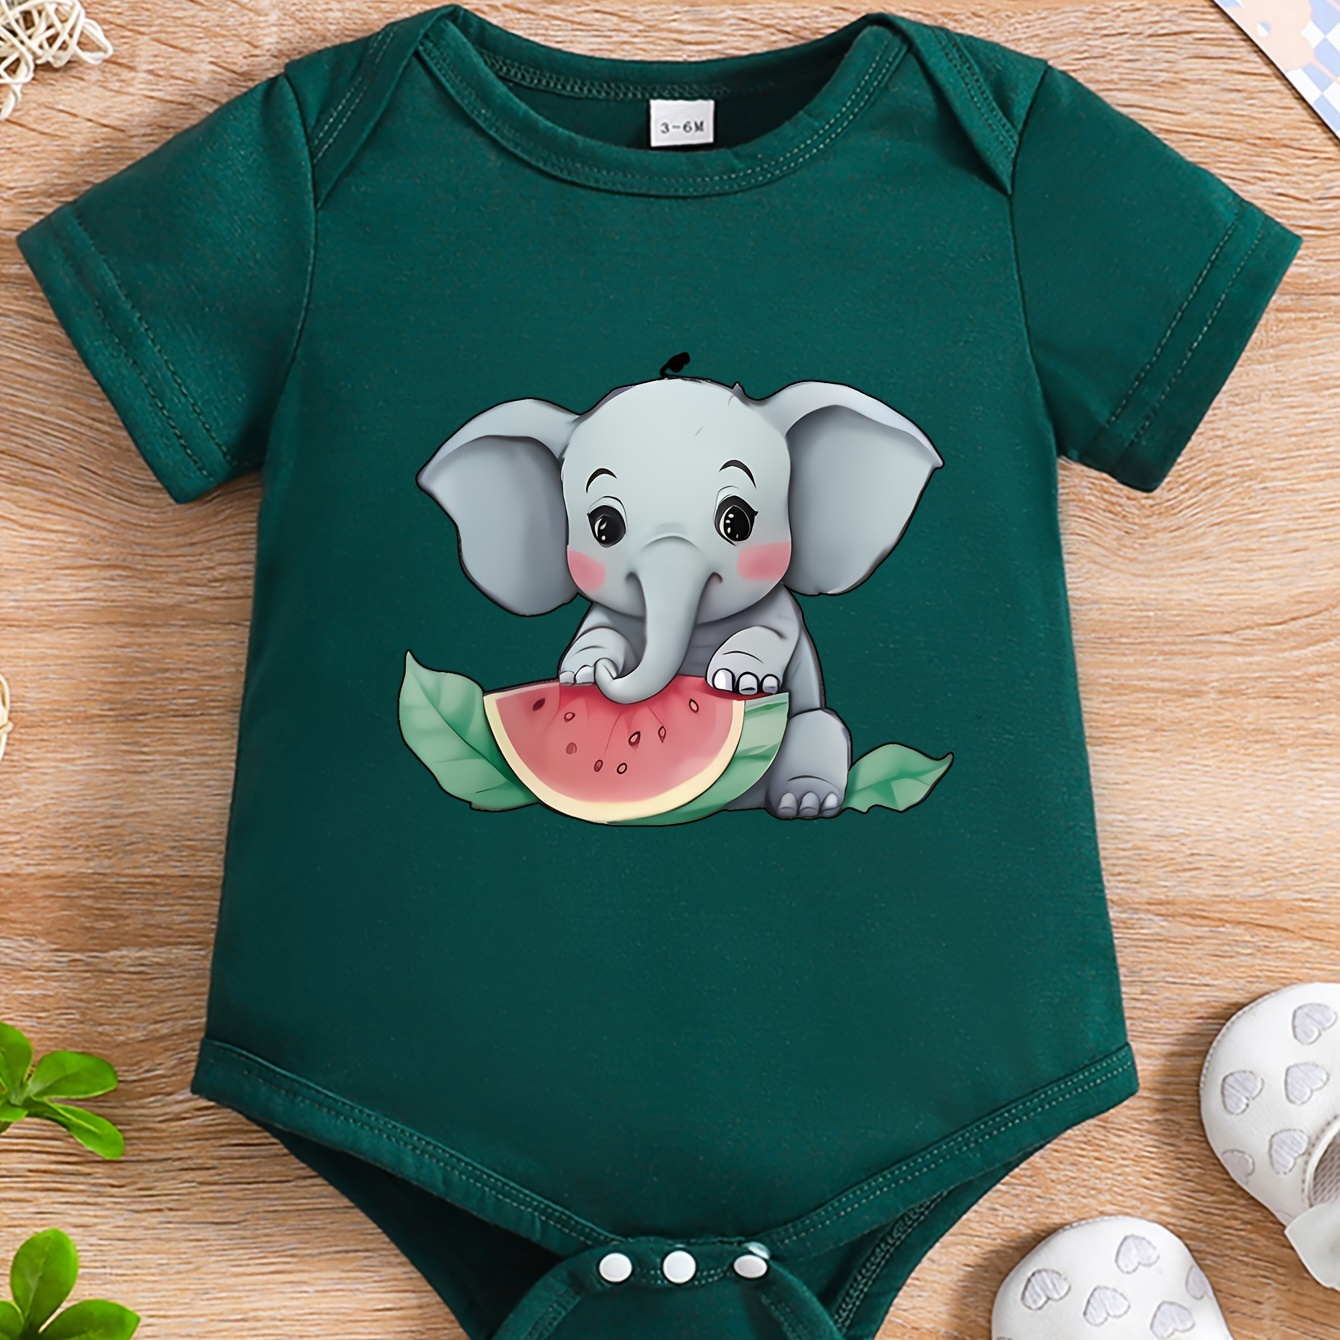 

Infant Girls' Summer Short Sleeve Round Neck Romper, Cute Cartoon Elephant & Watermelon Print, Casual Style Bodysuit